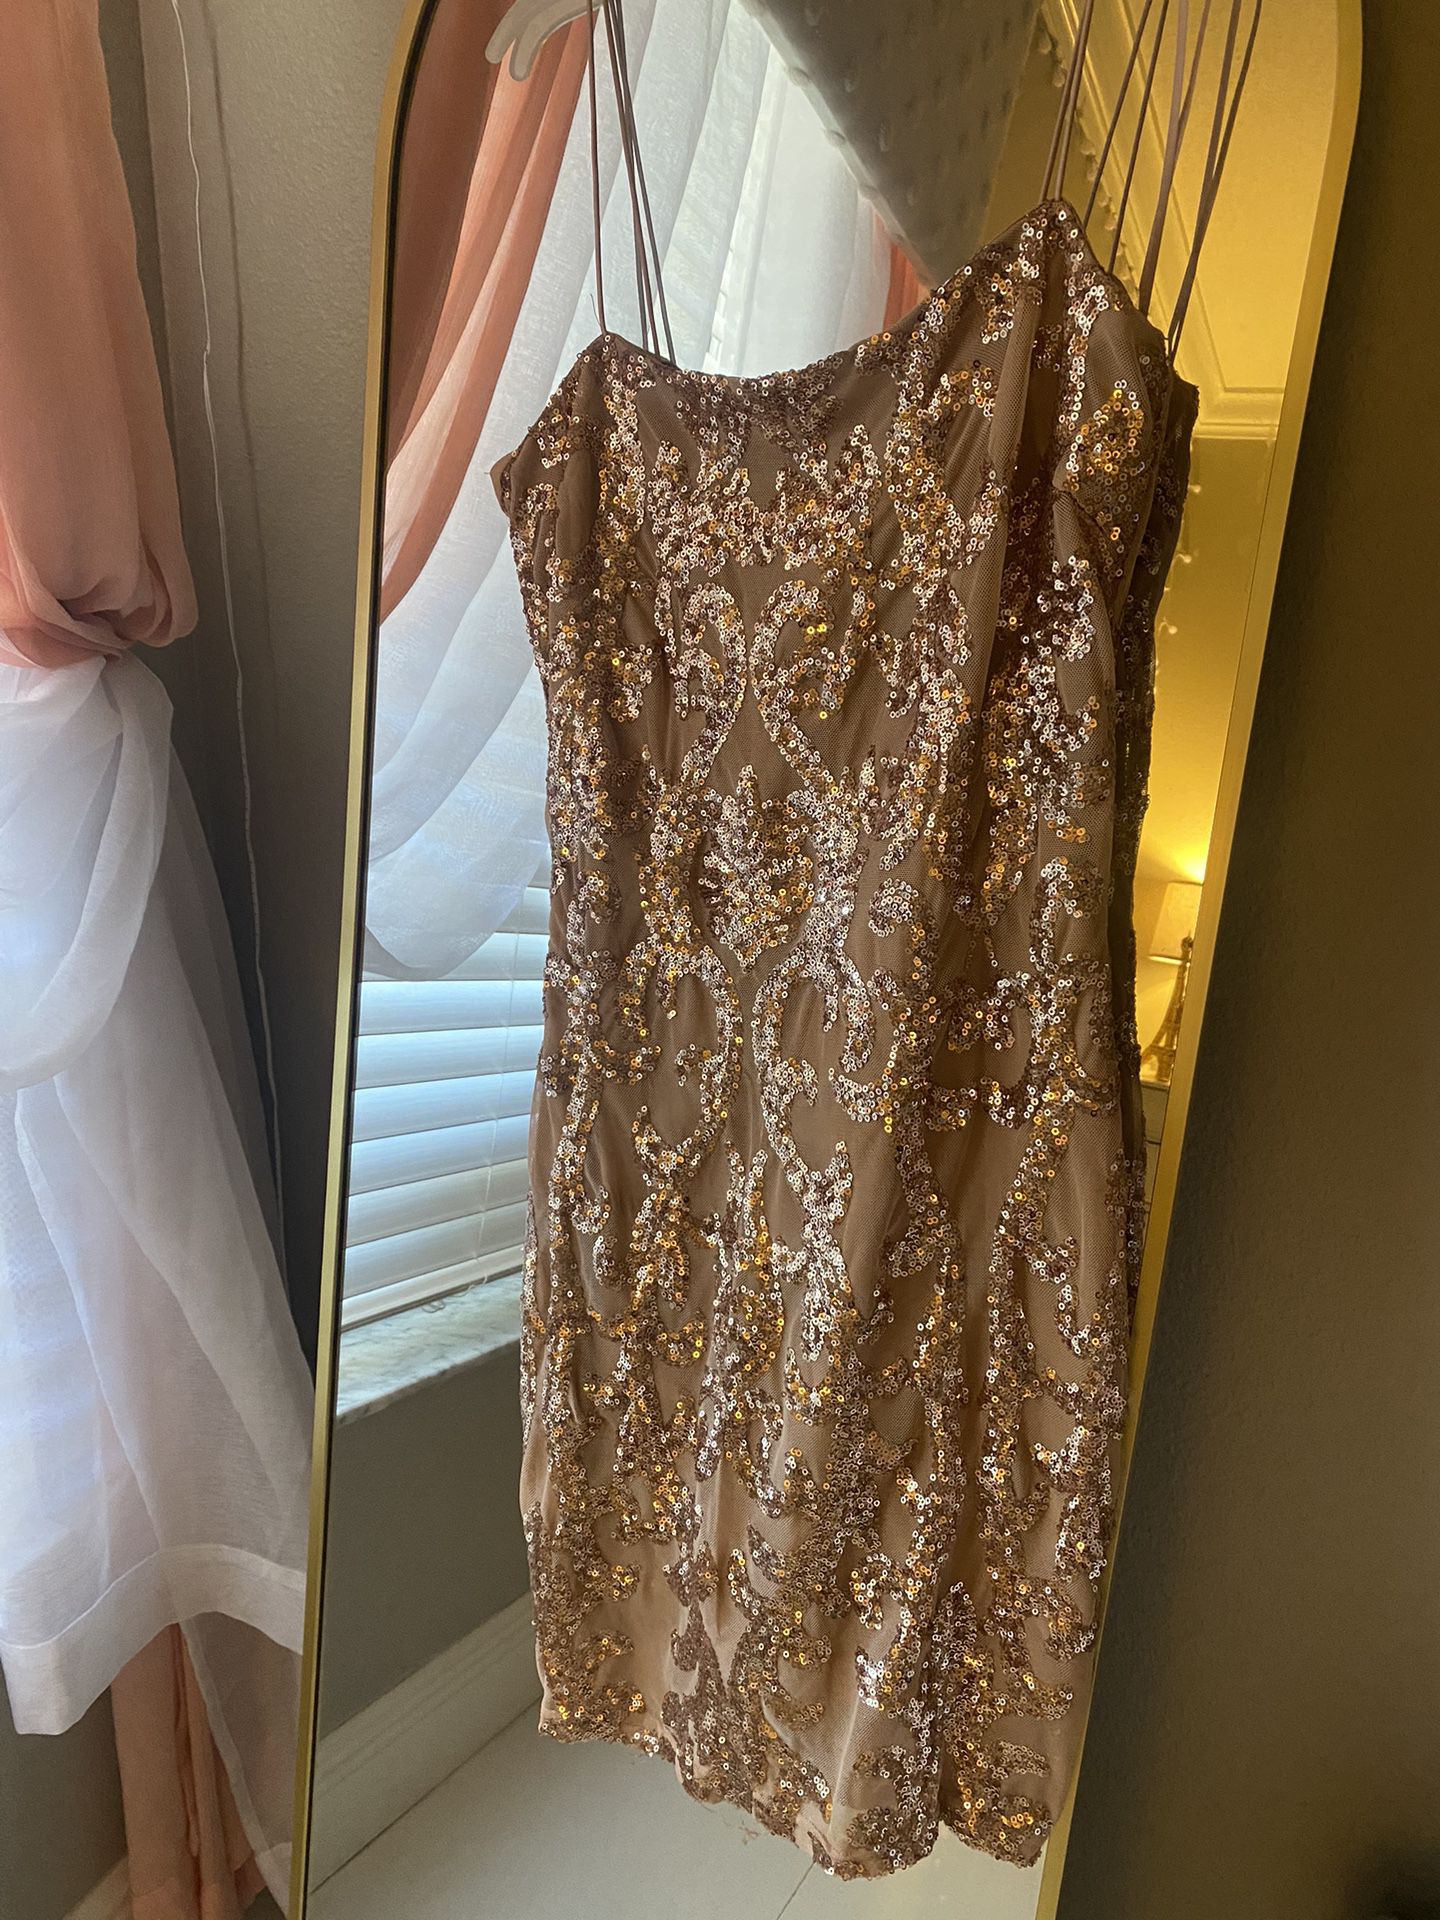 rose gold sparkly dress!